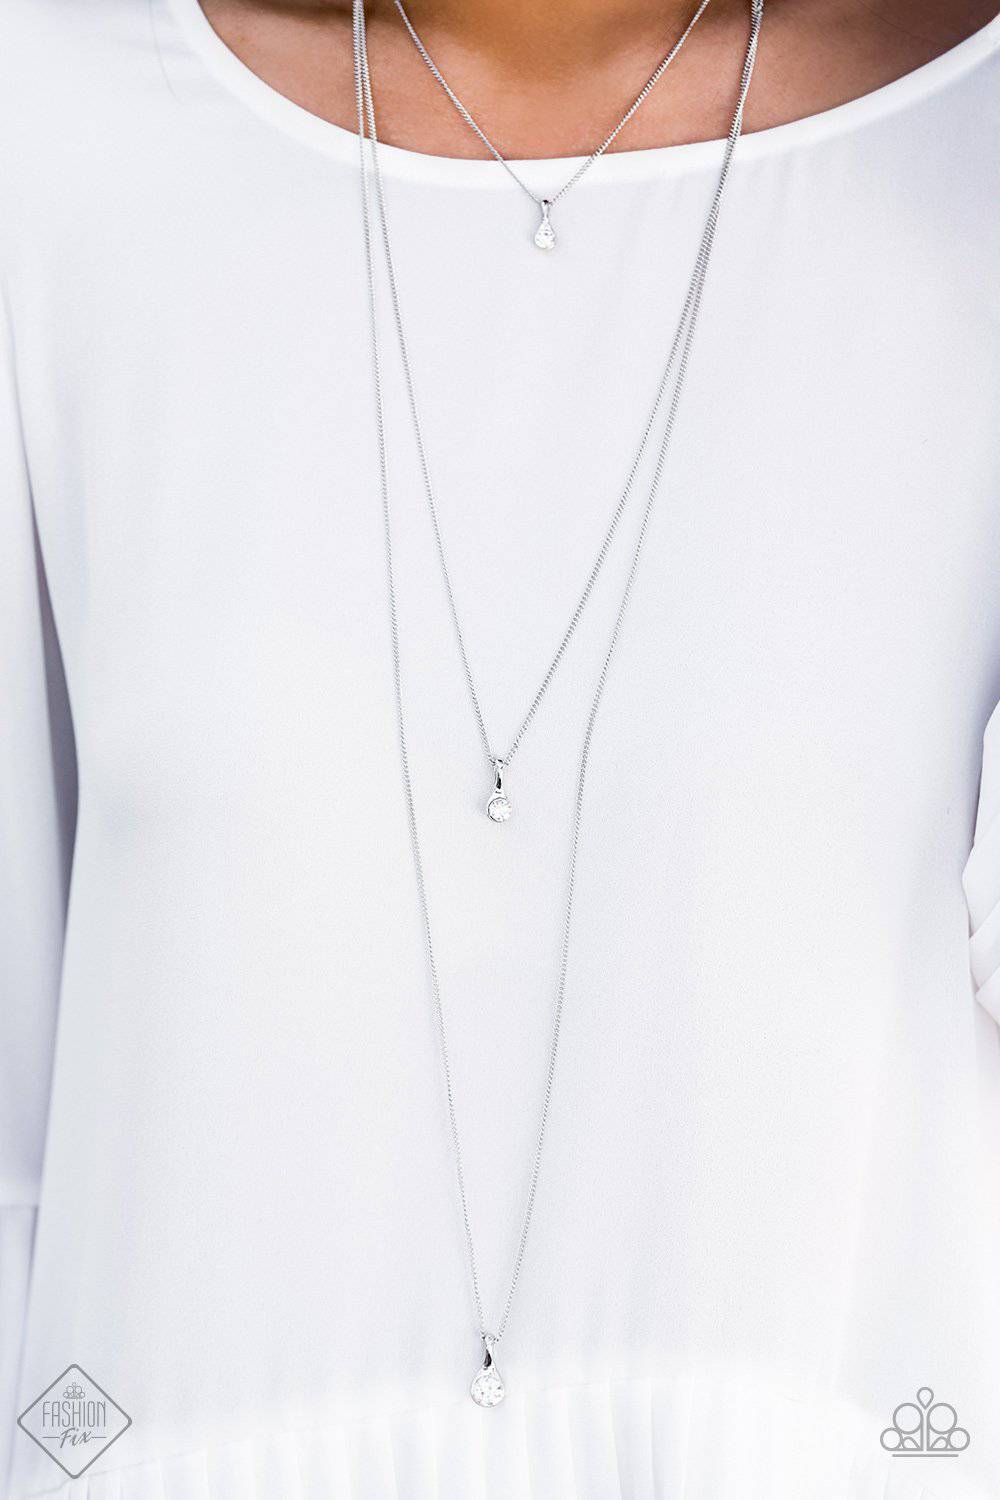 Crystal Chic - White Rhinestone Layered Necklace - Paparazzi Accessories - GlaMarous Titi Jewels